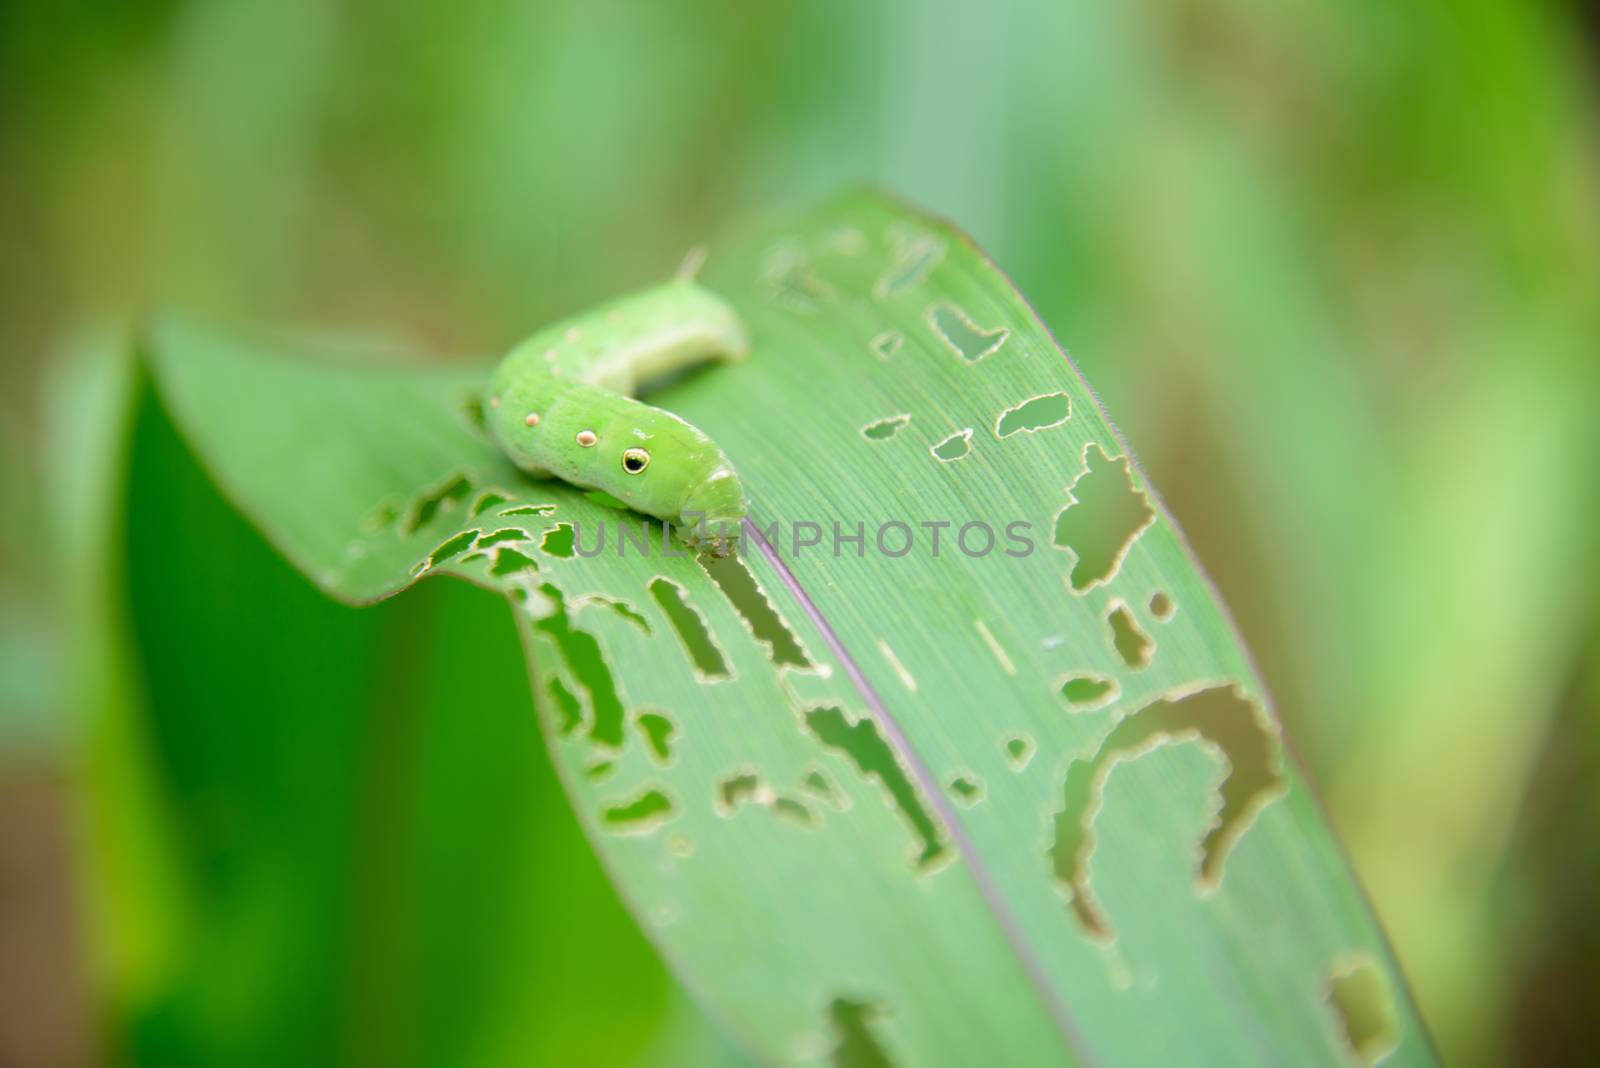 Green worm on tree leaf by rukawajung